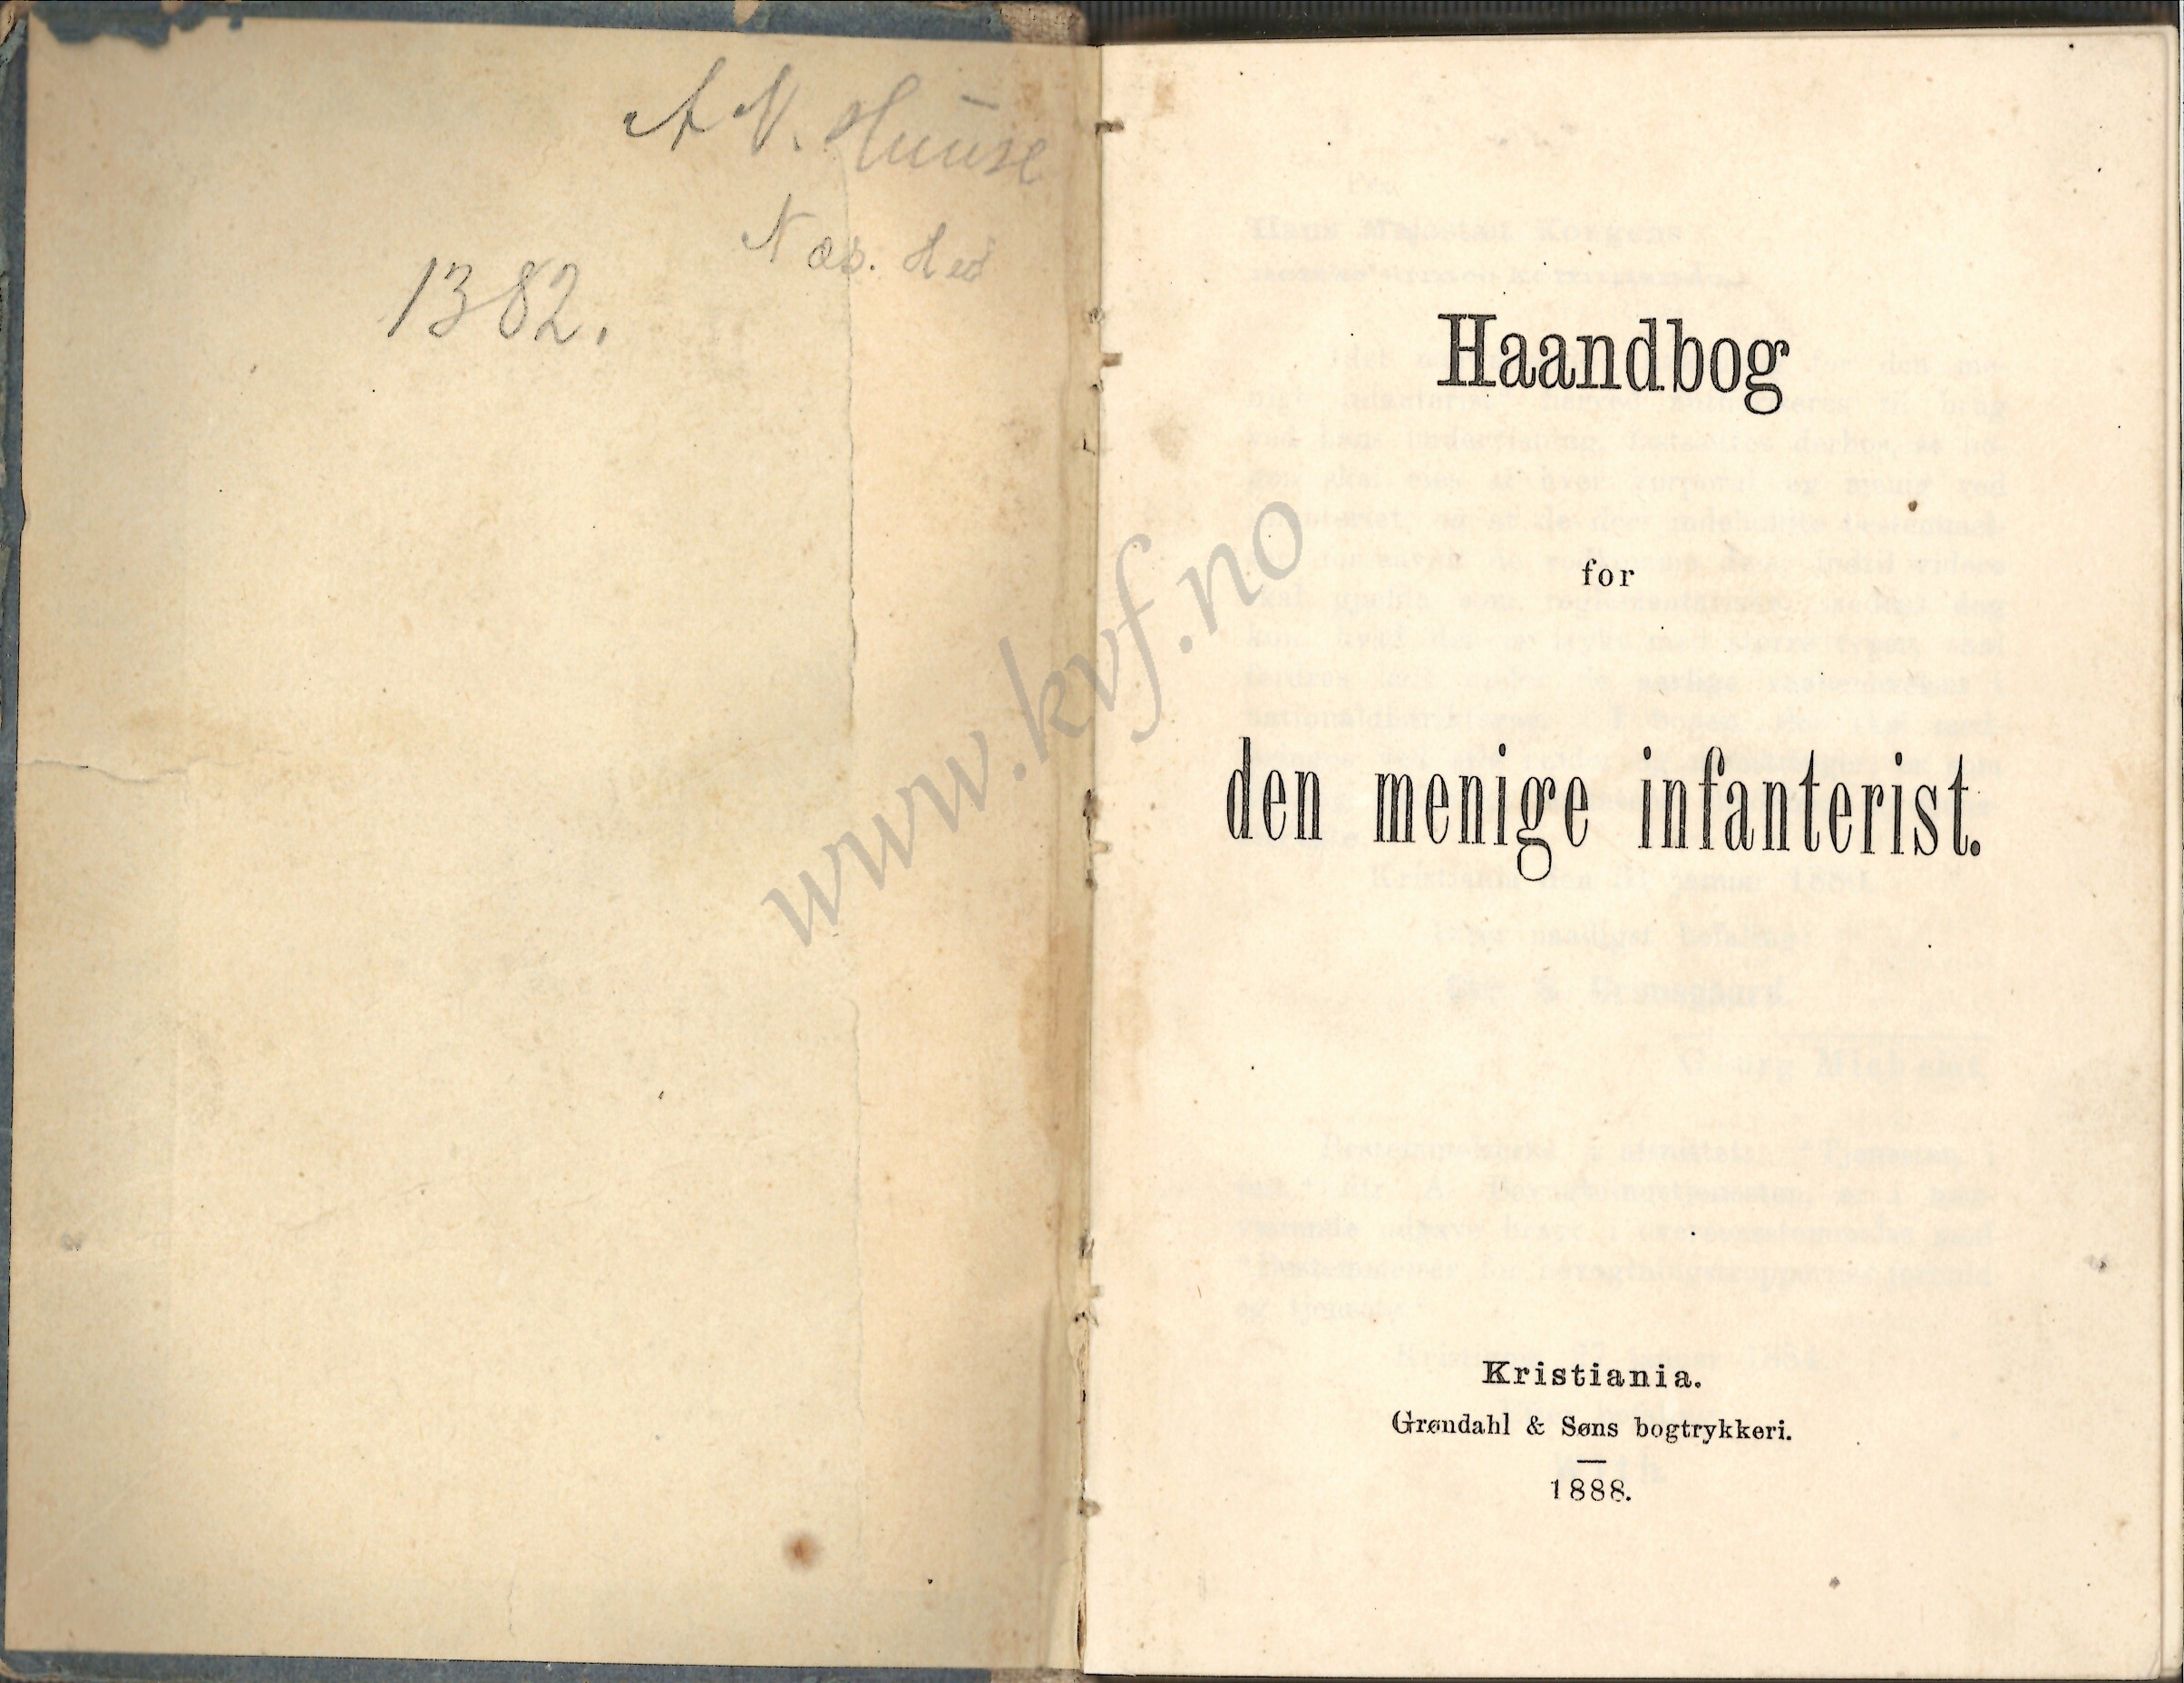 ./doc/reglement/Inf1888/Haandbok-Menig-Infanterist-1888-1.jpg